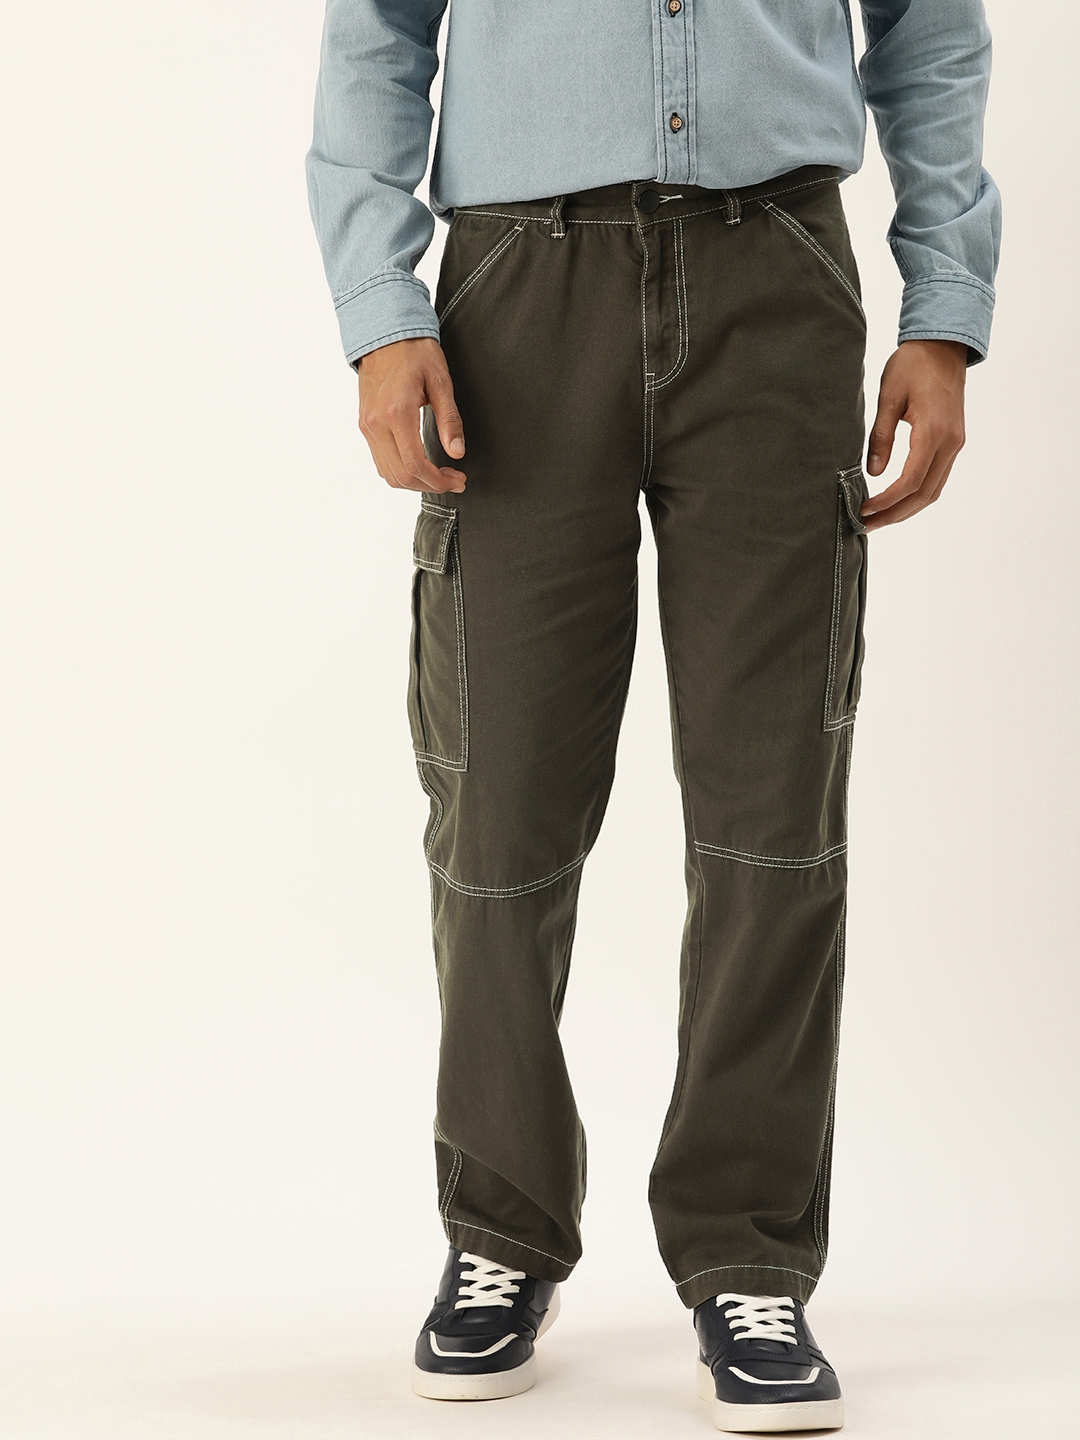 3 Cargo Pants Outfit Ideas For Men - Bewakoof Blog